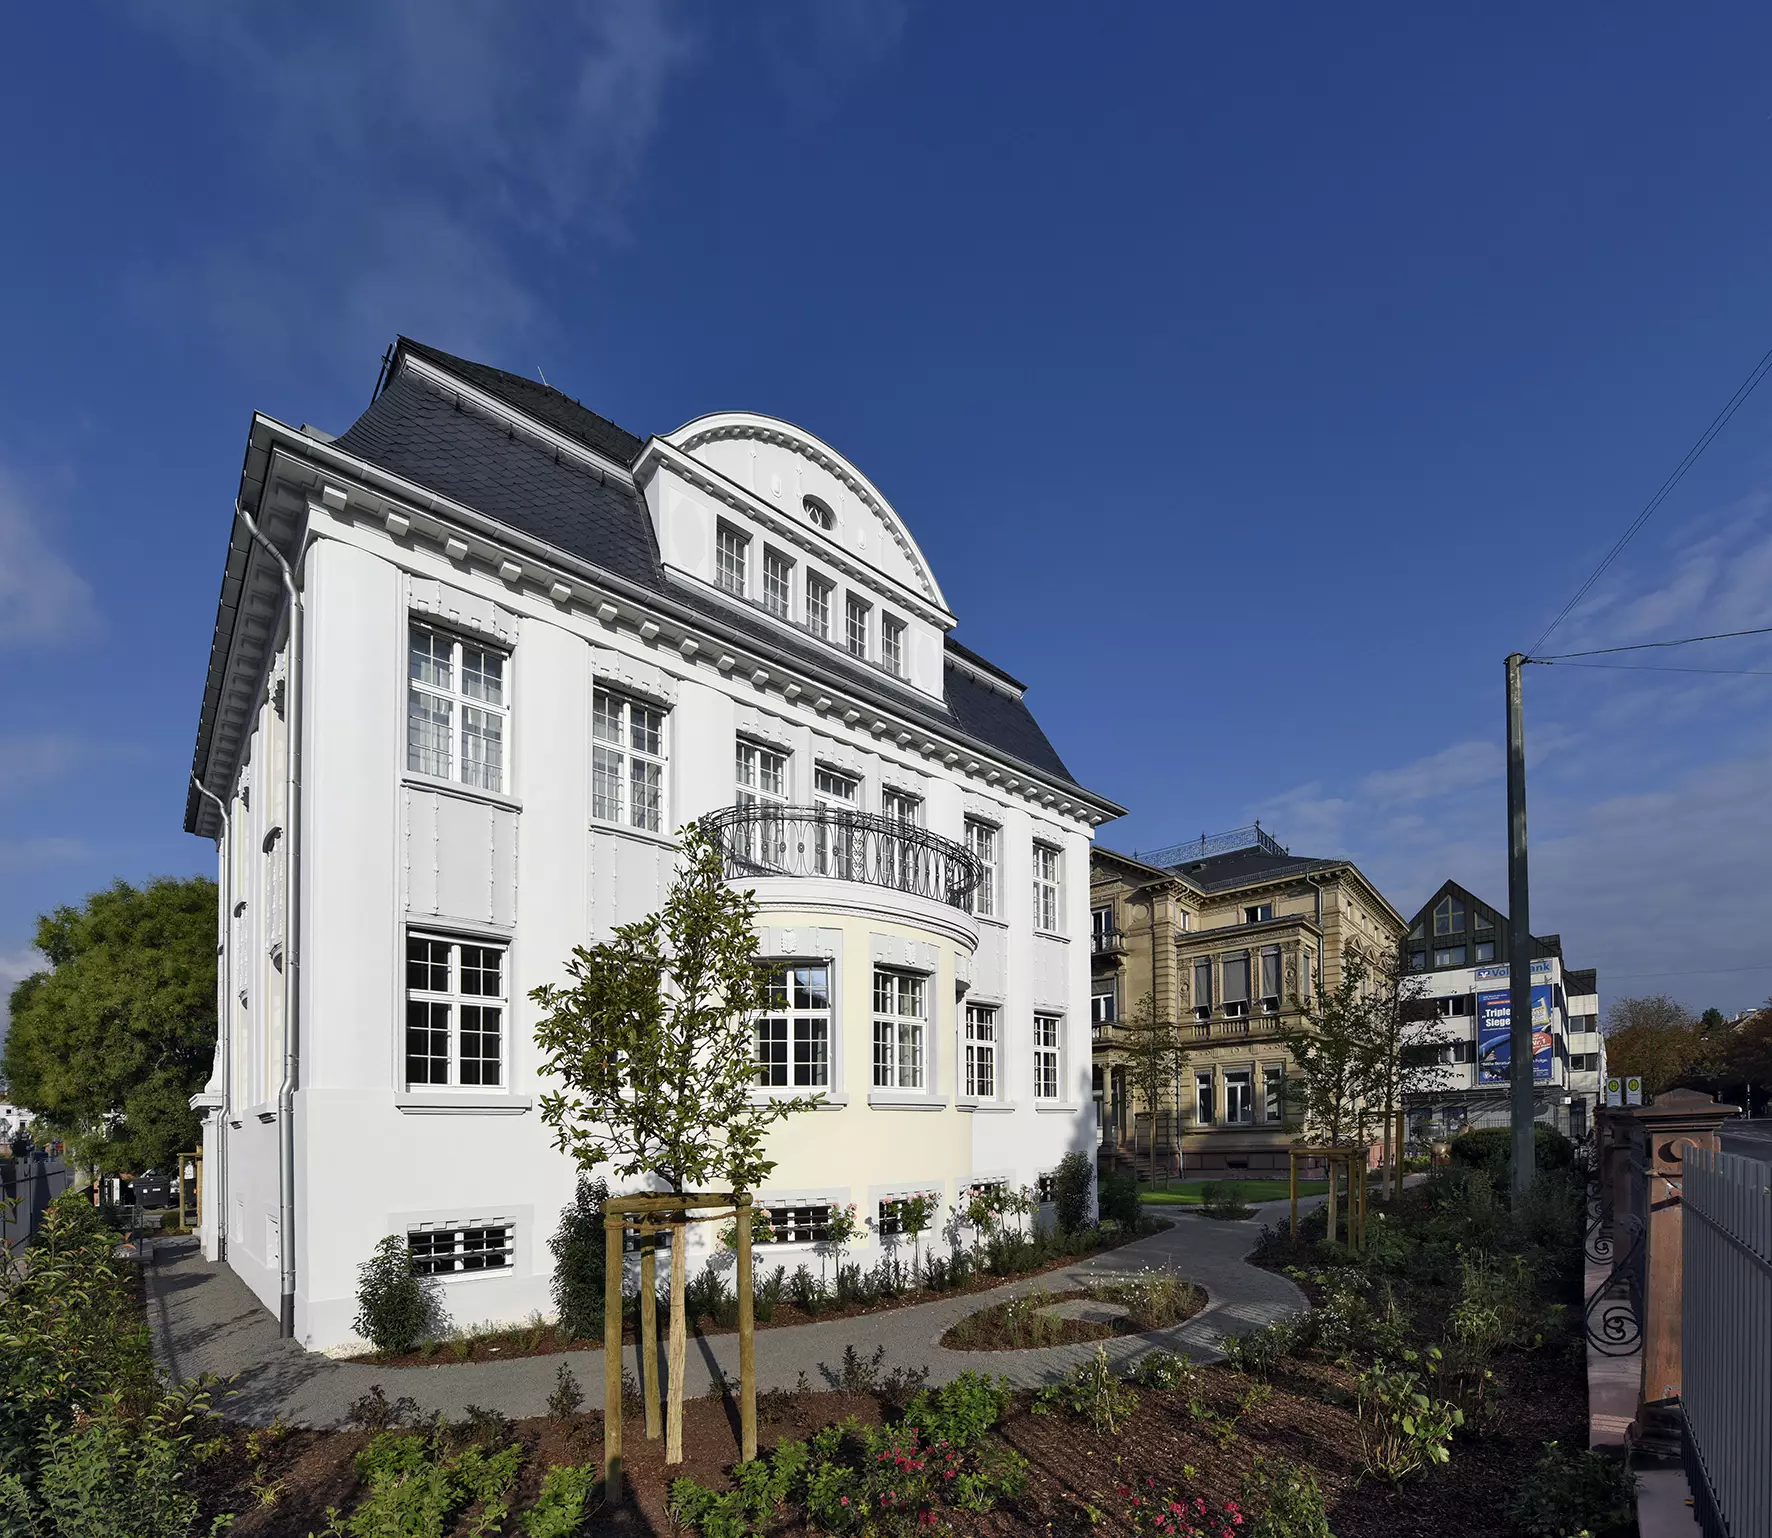 Volksbank KRP Bild 1 Villa Koerbling